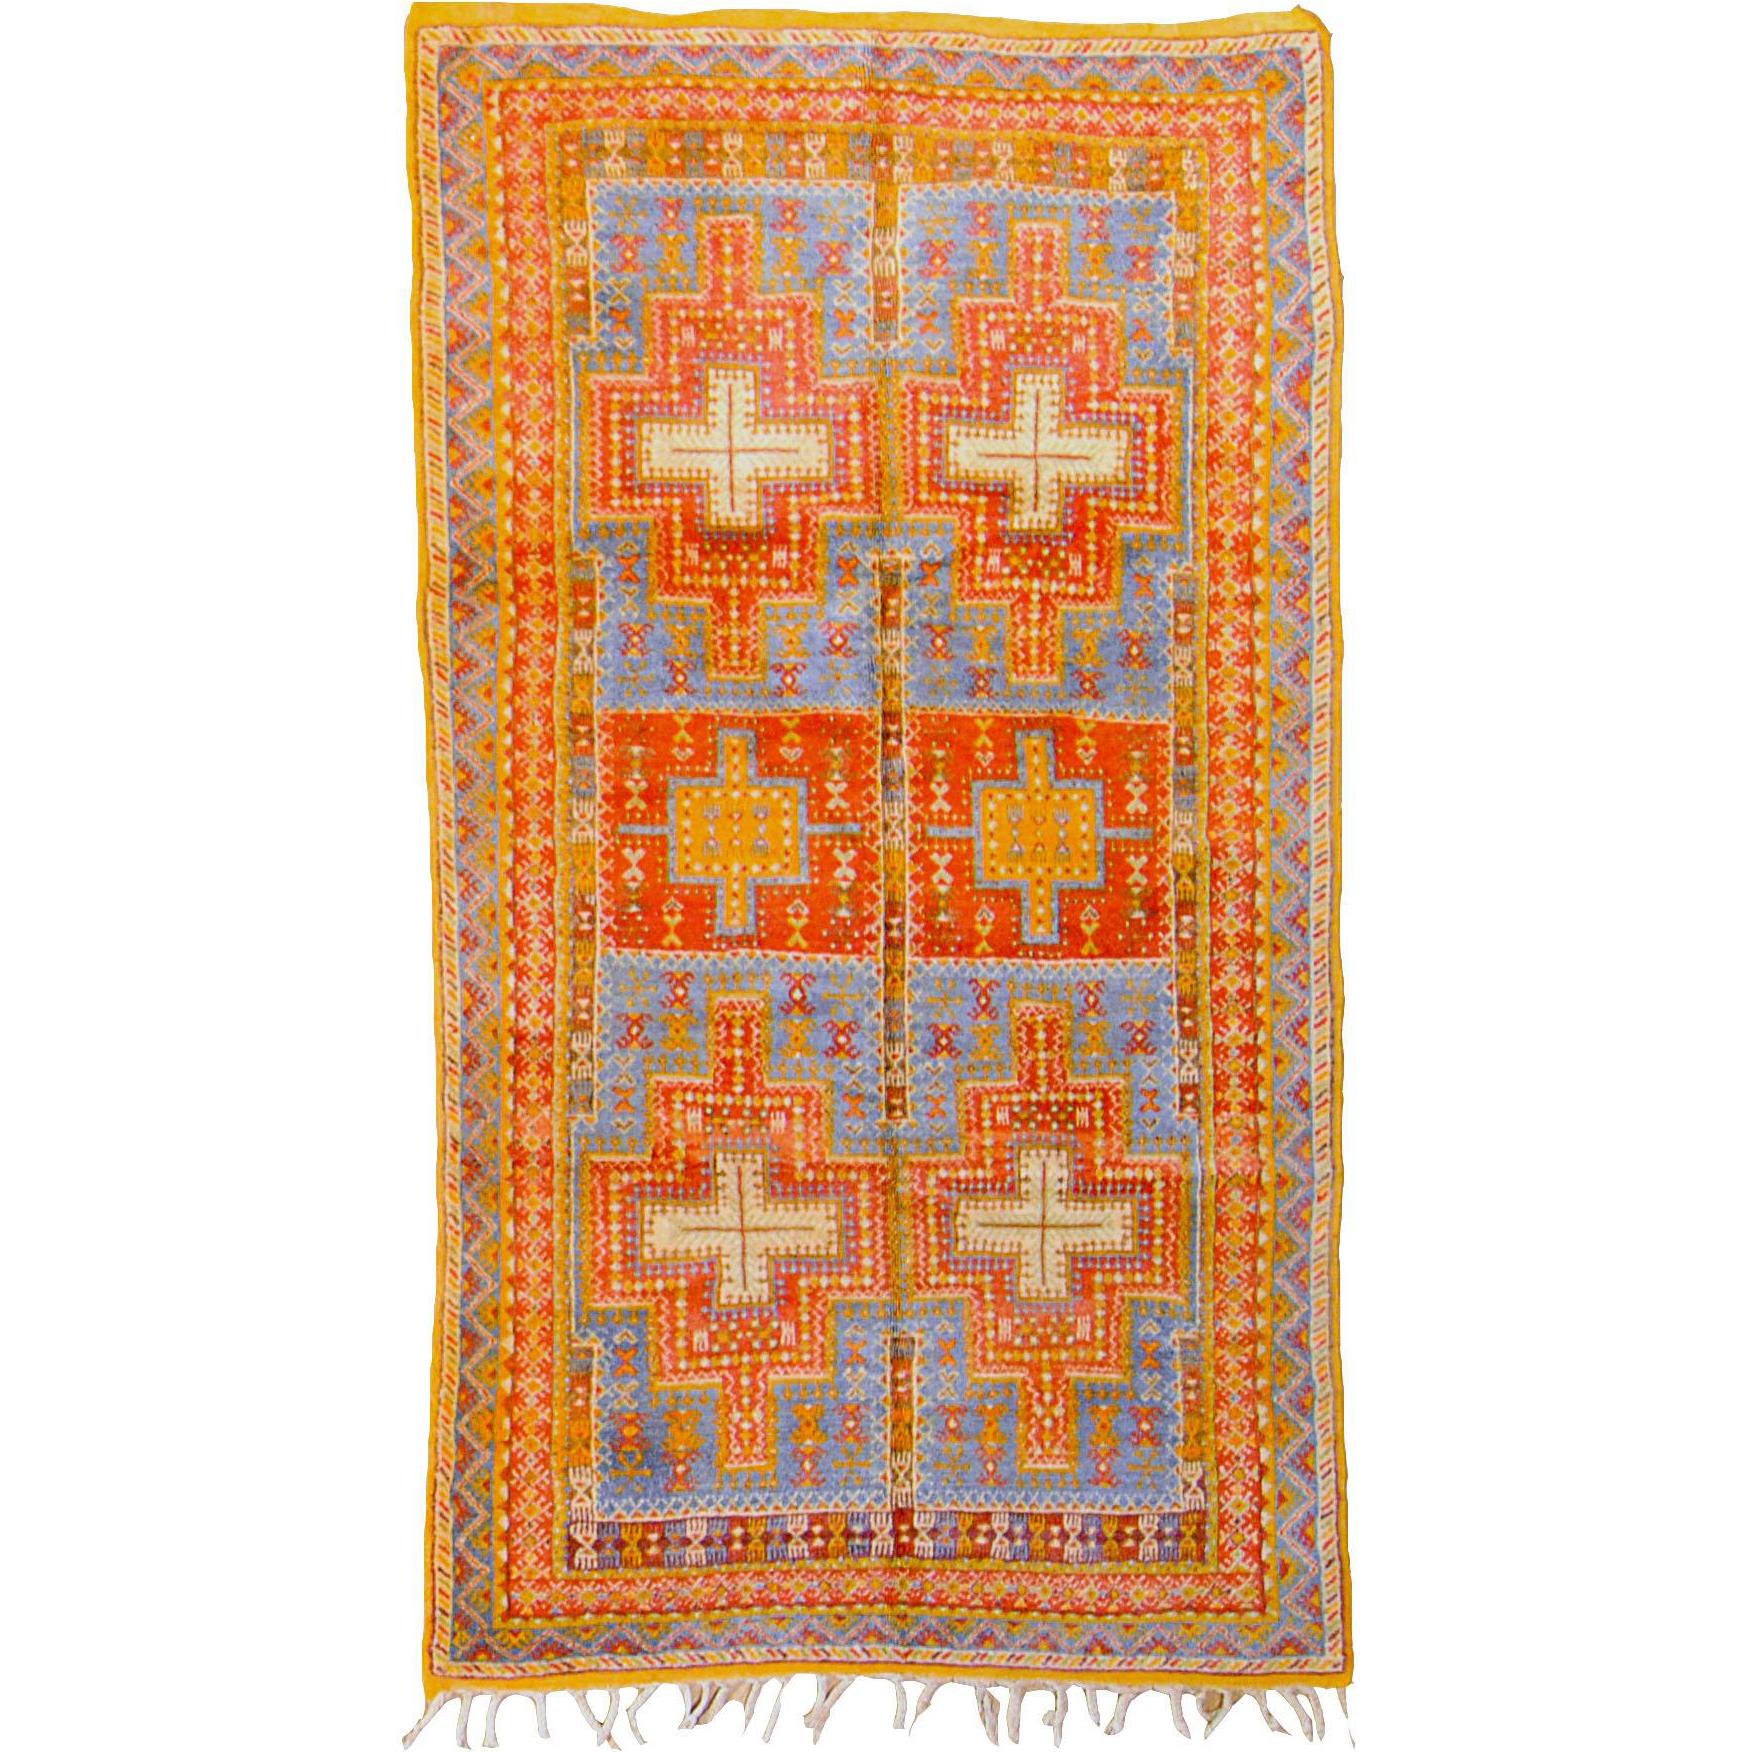 20th Century Orange & Blu Wool Moroccan Berber Tribal Ouauzouite Rug, circa 1960